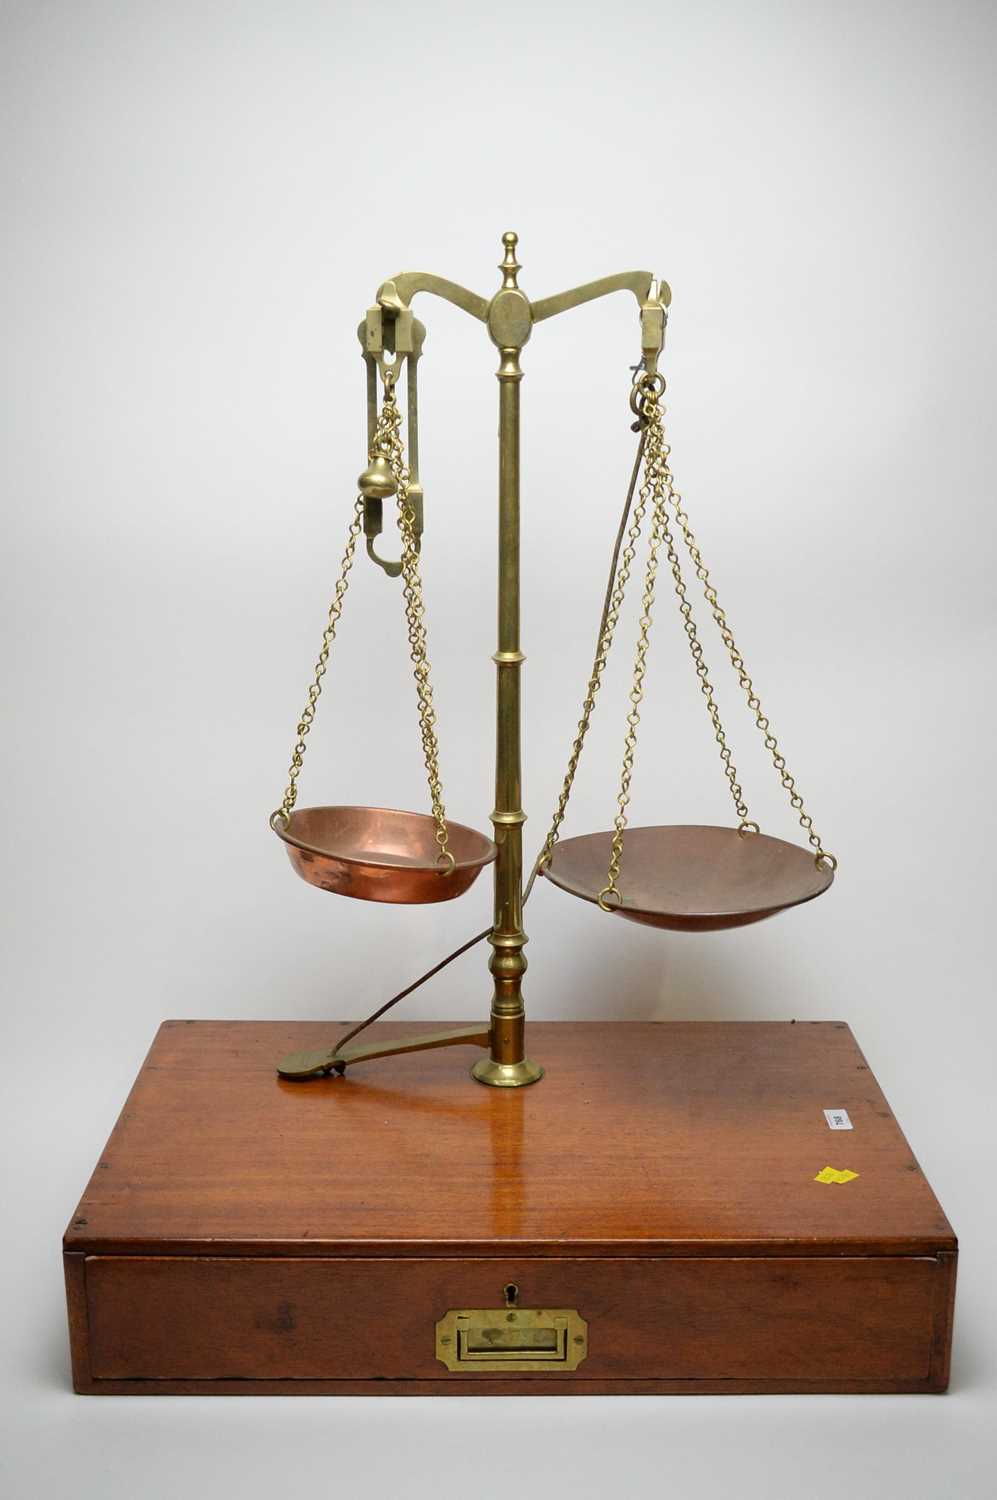 Lot 768 - A set of brass balance scales.